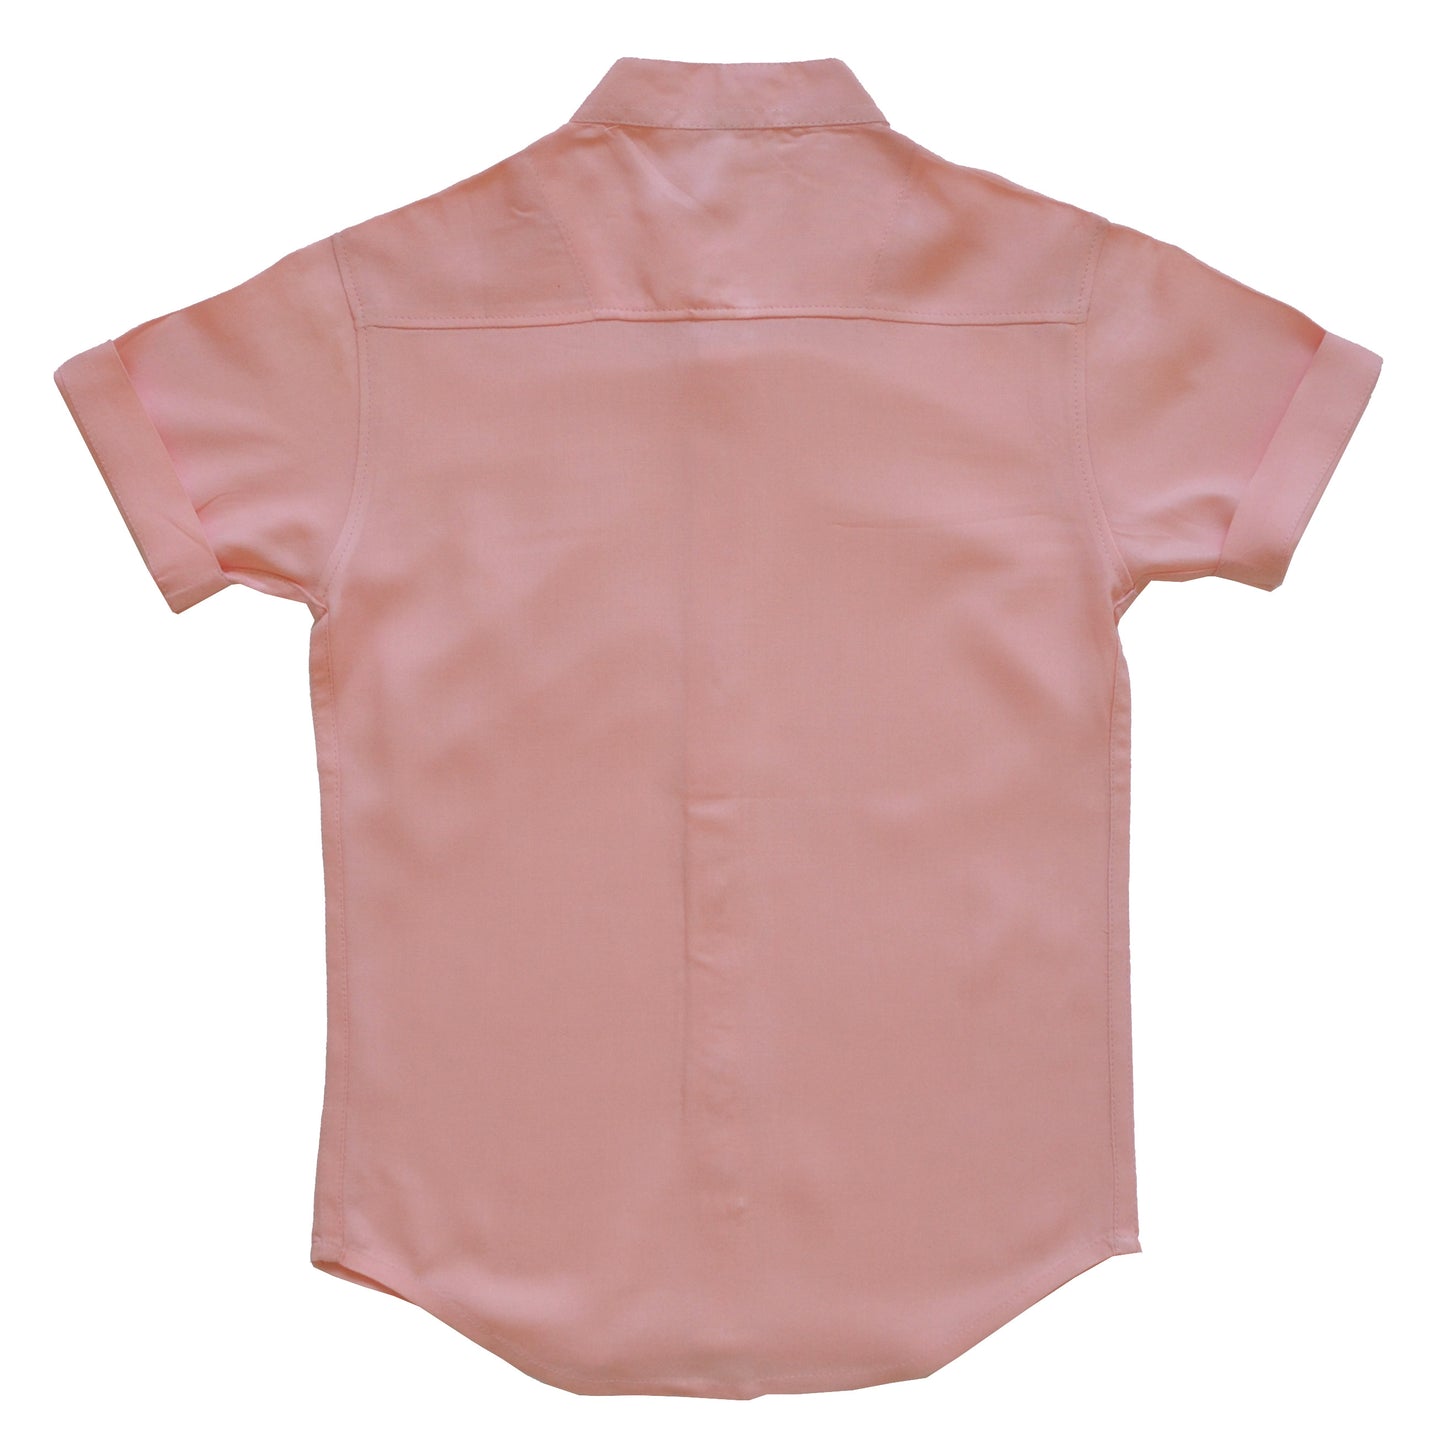 Pastel shade rayon shirts for boys - Combo of 2 - Yellow & Pink